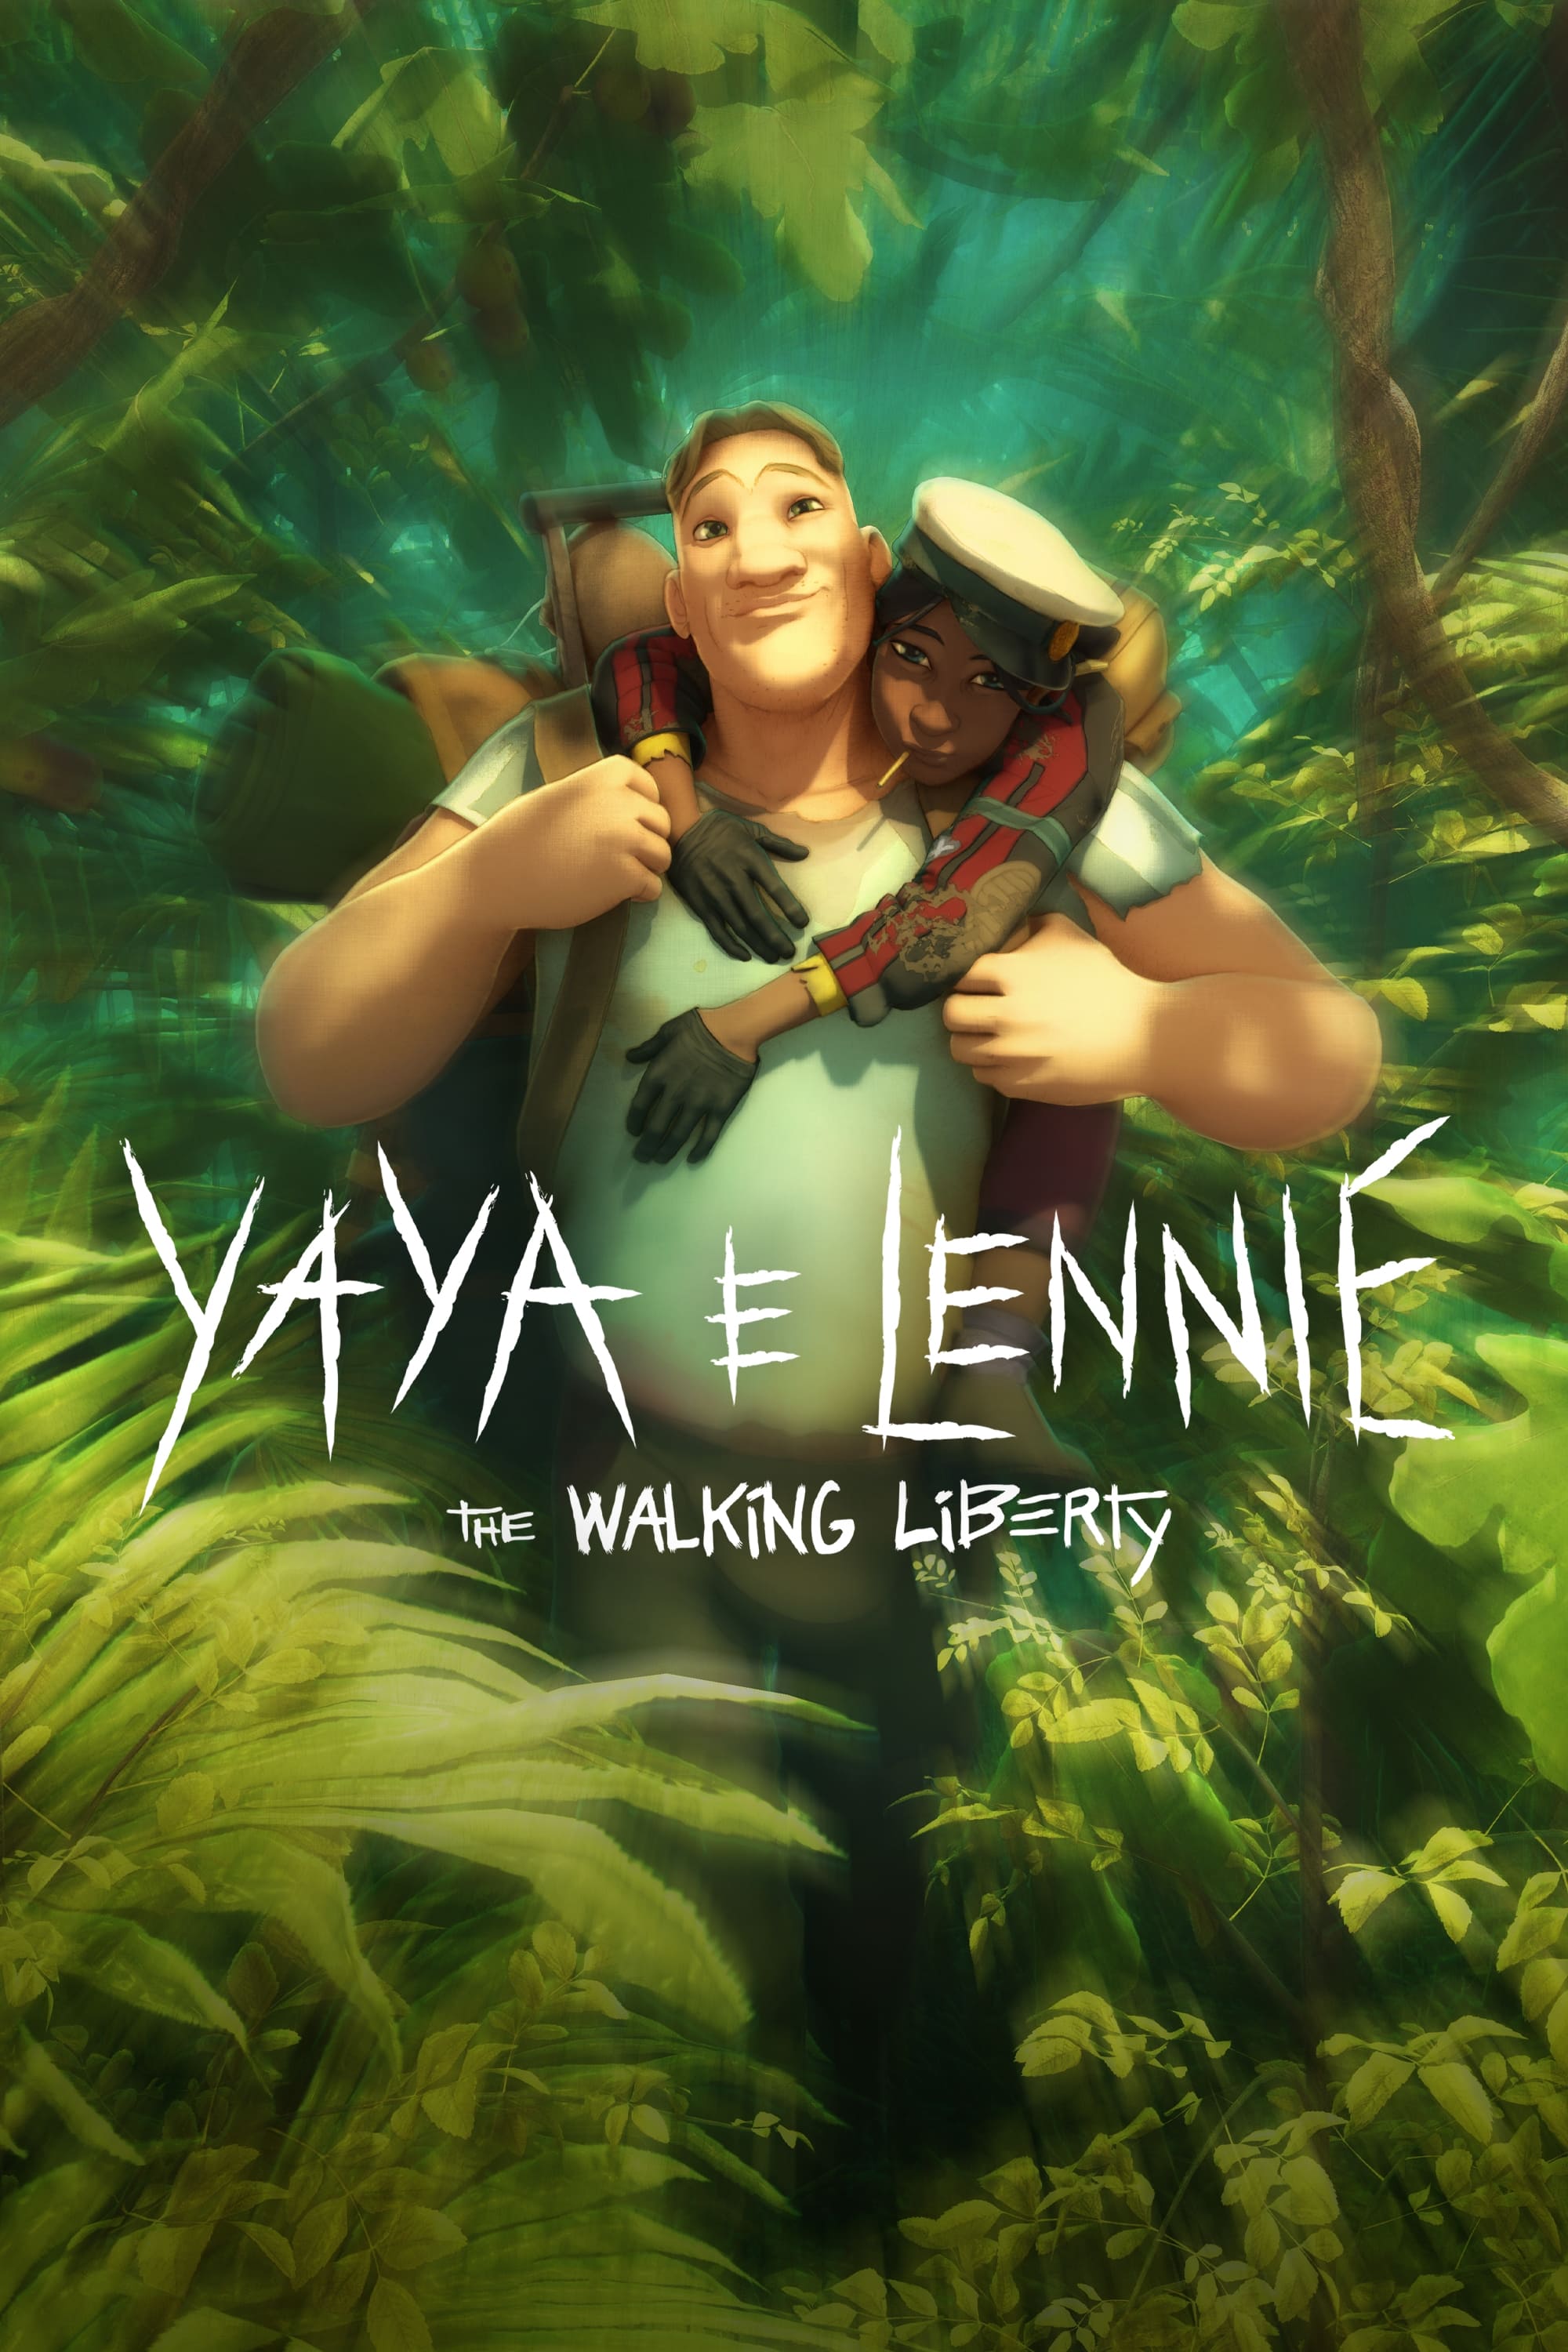 Yaya & Lennie - The Walking Liberty